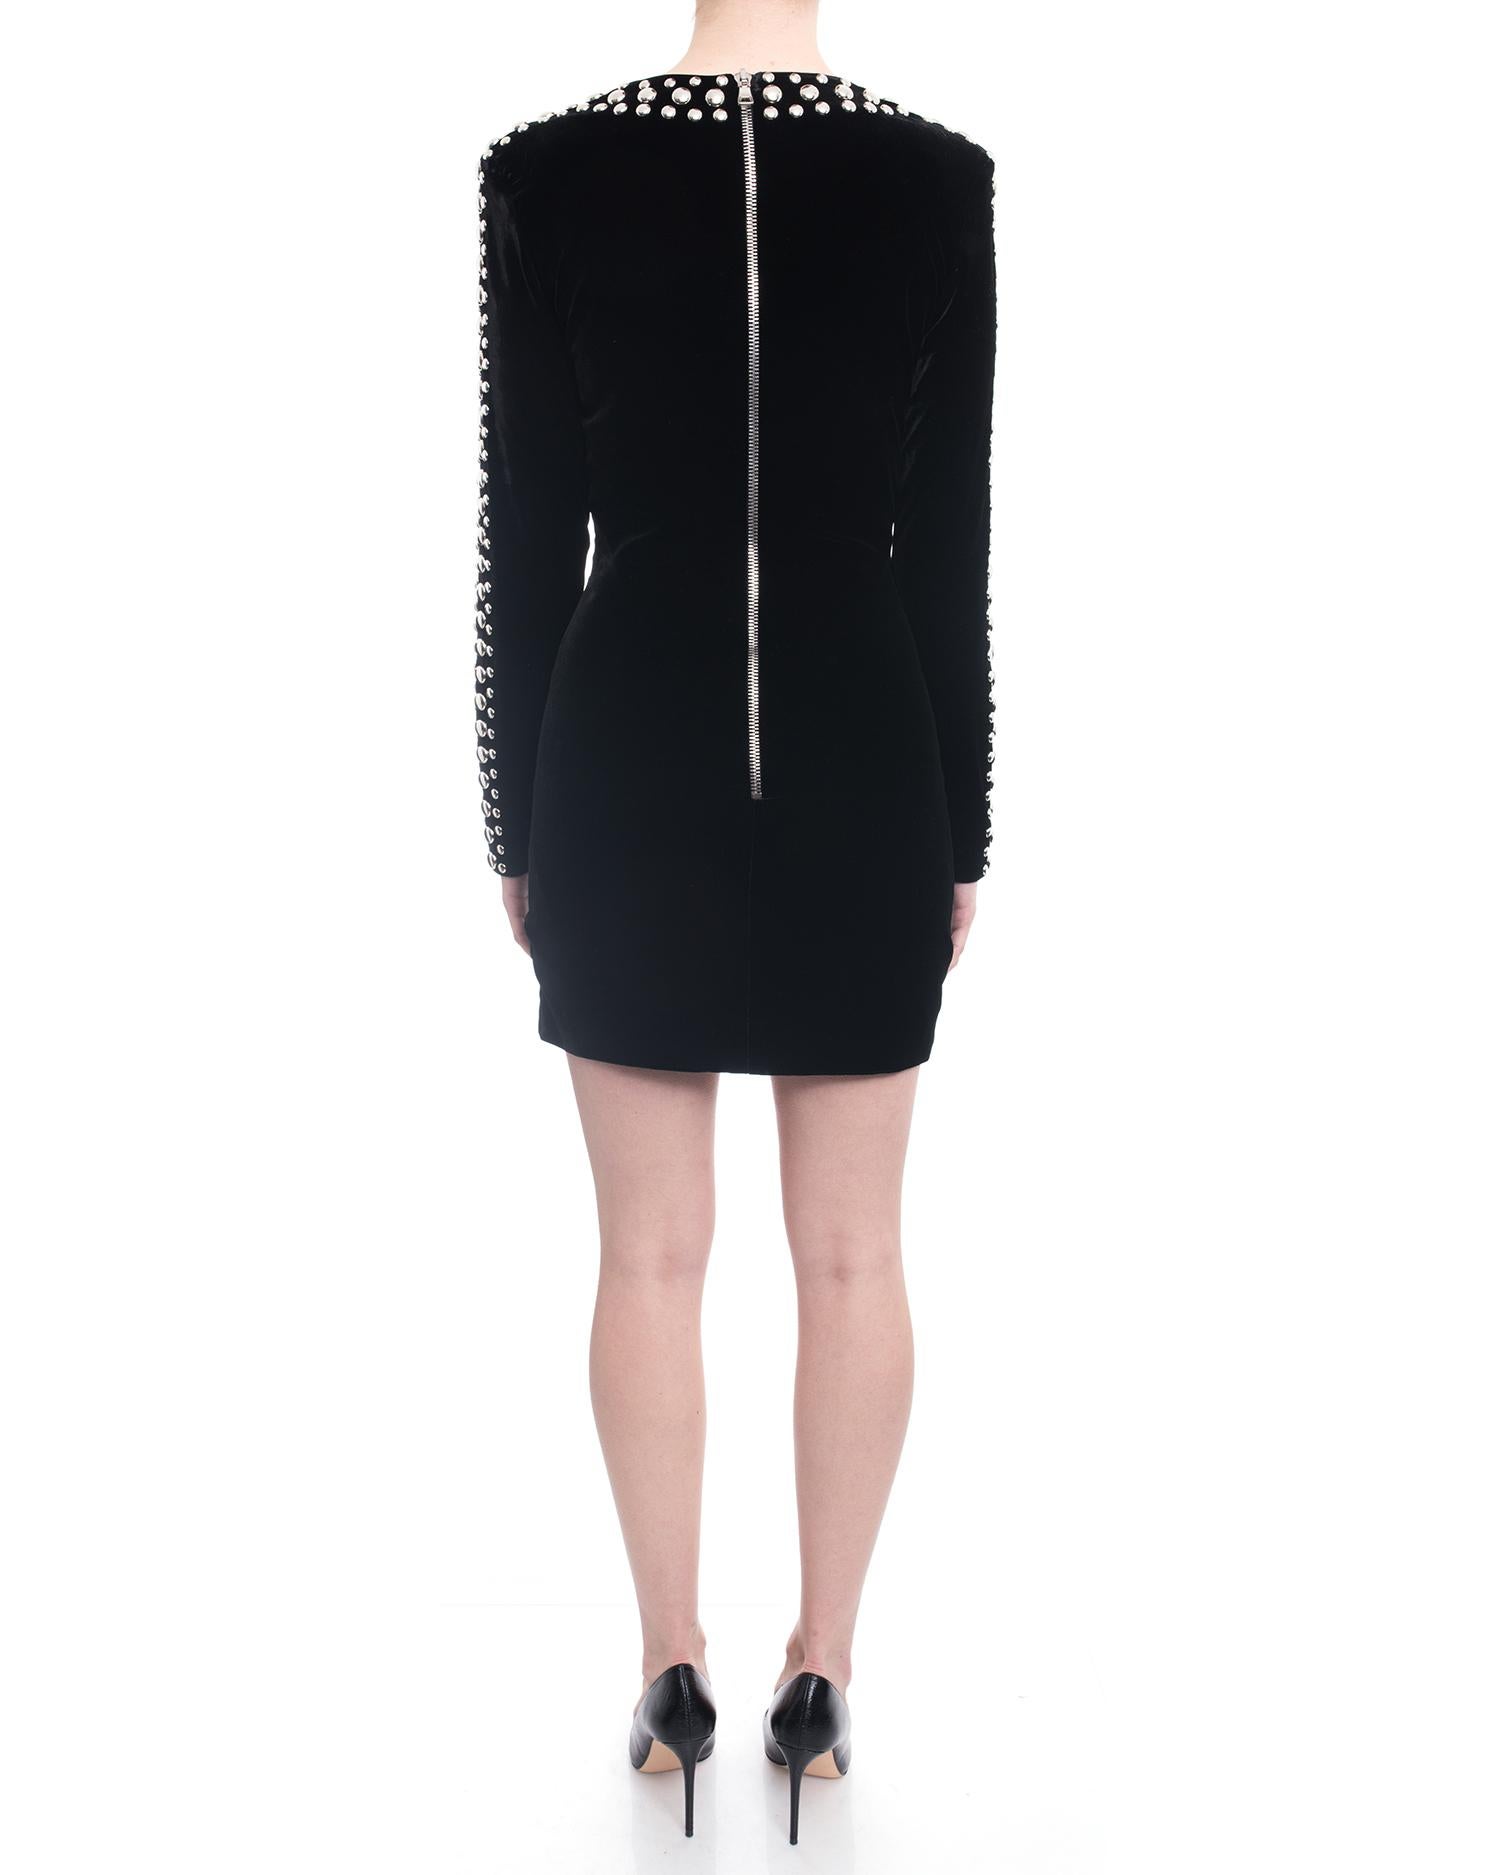 Balmain Black Velvet Stretch Mini Dress with Silver Studs - 10 2